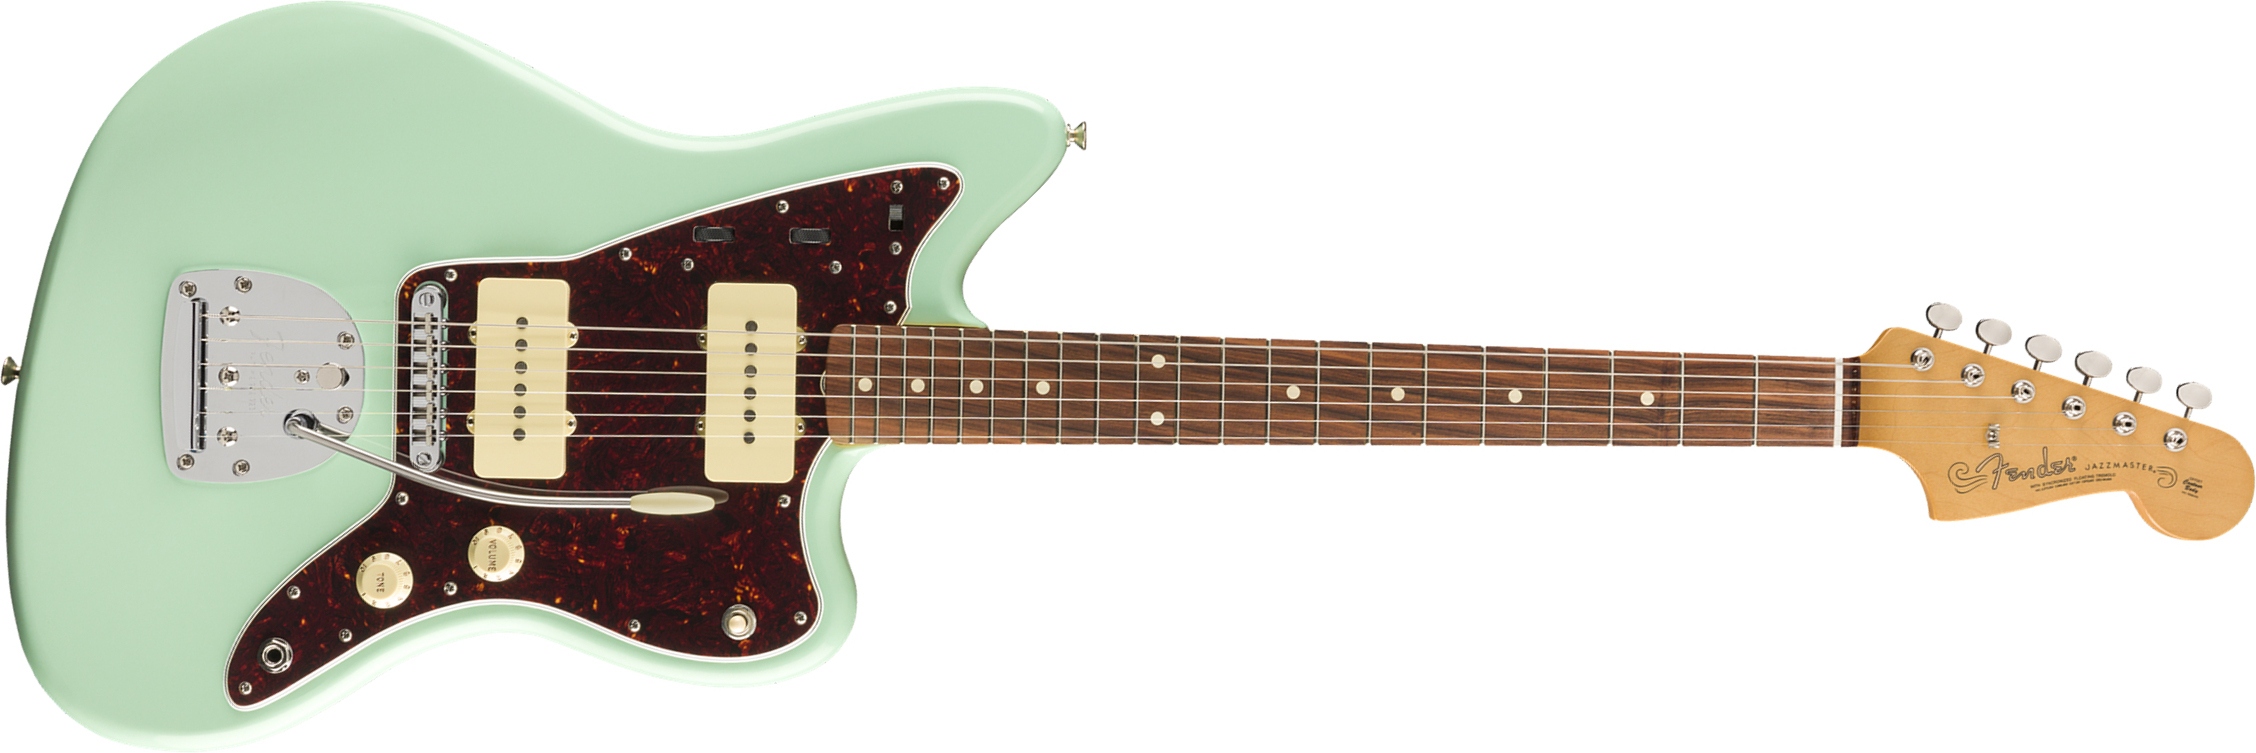 Fender Jazzmaster 60s Vintera Modified Mex Pf - Surf Green - Retro rock electric guitar - Main picture